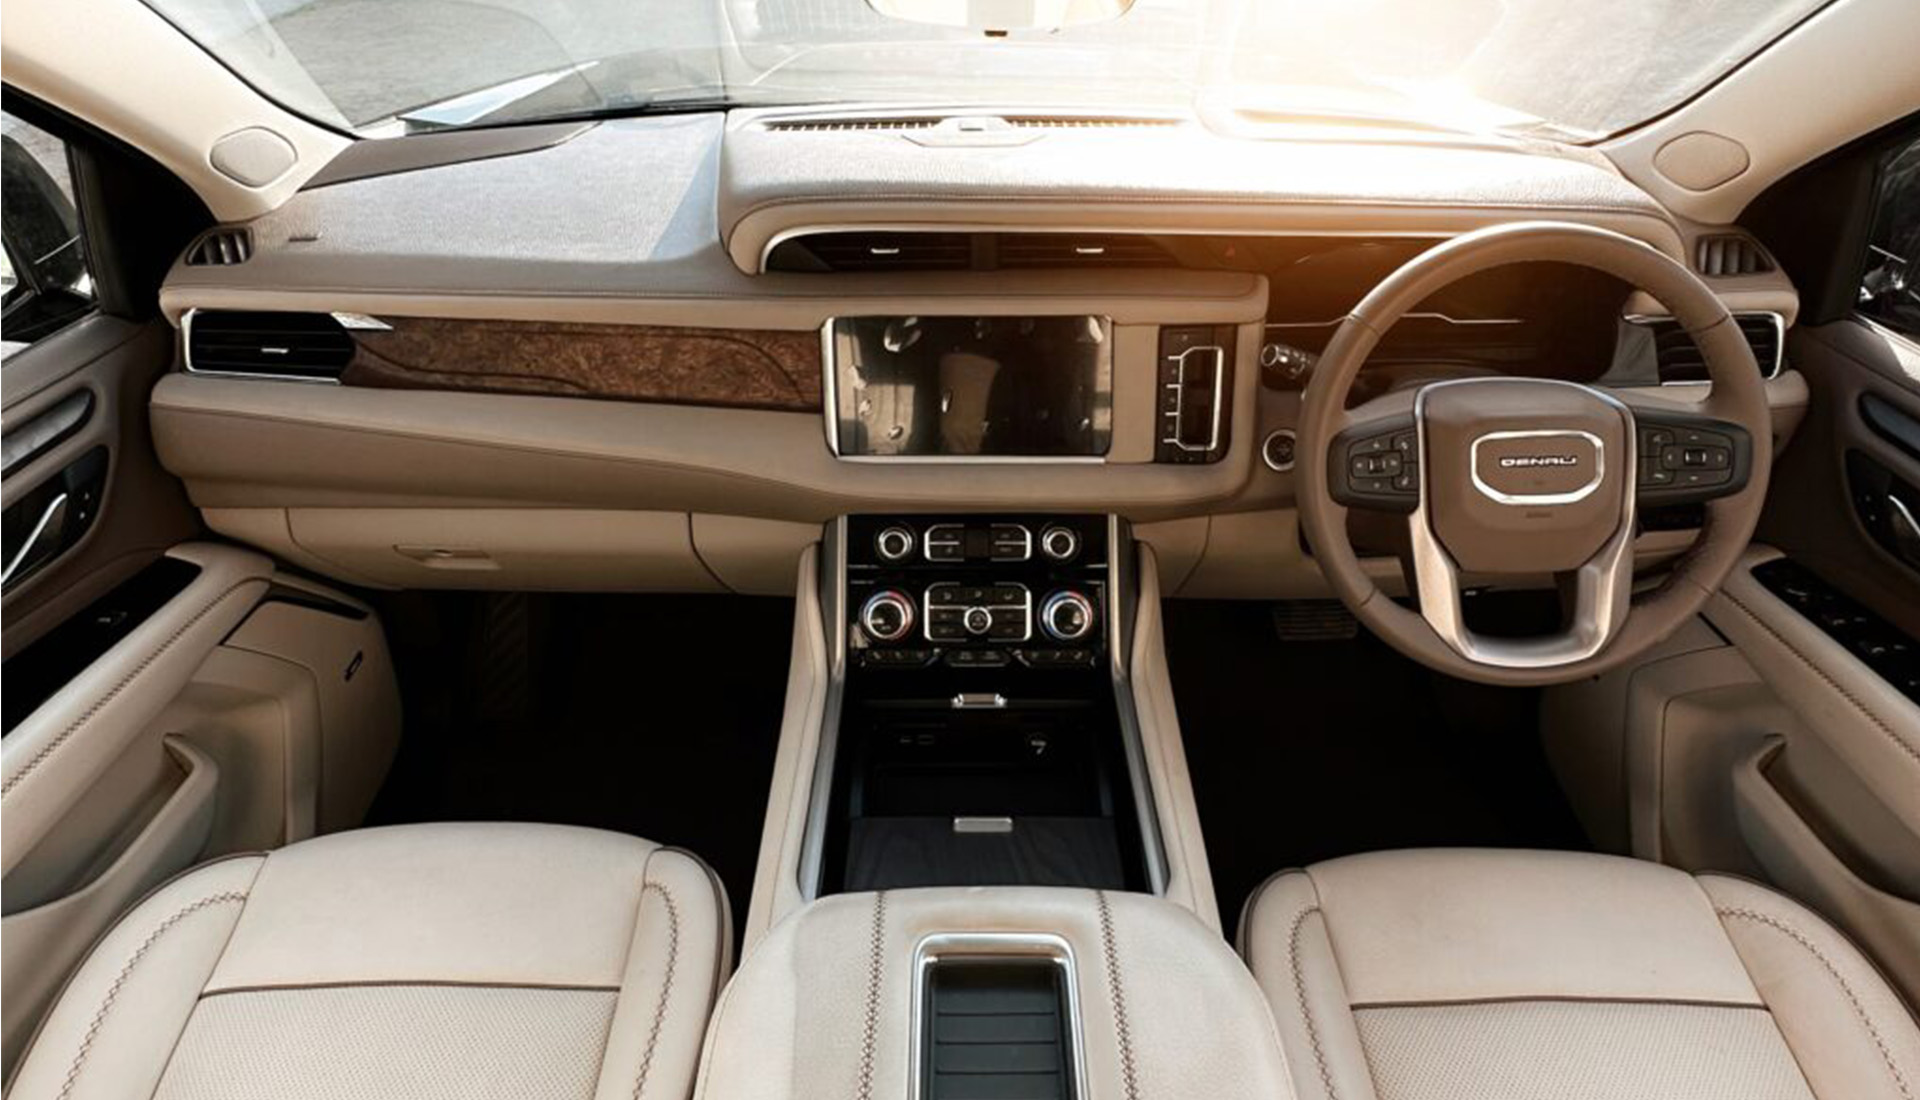 Luxurious beige interior of a modern Denali SUV.